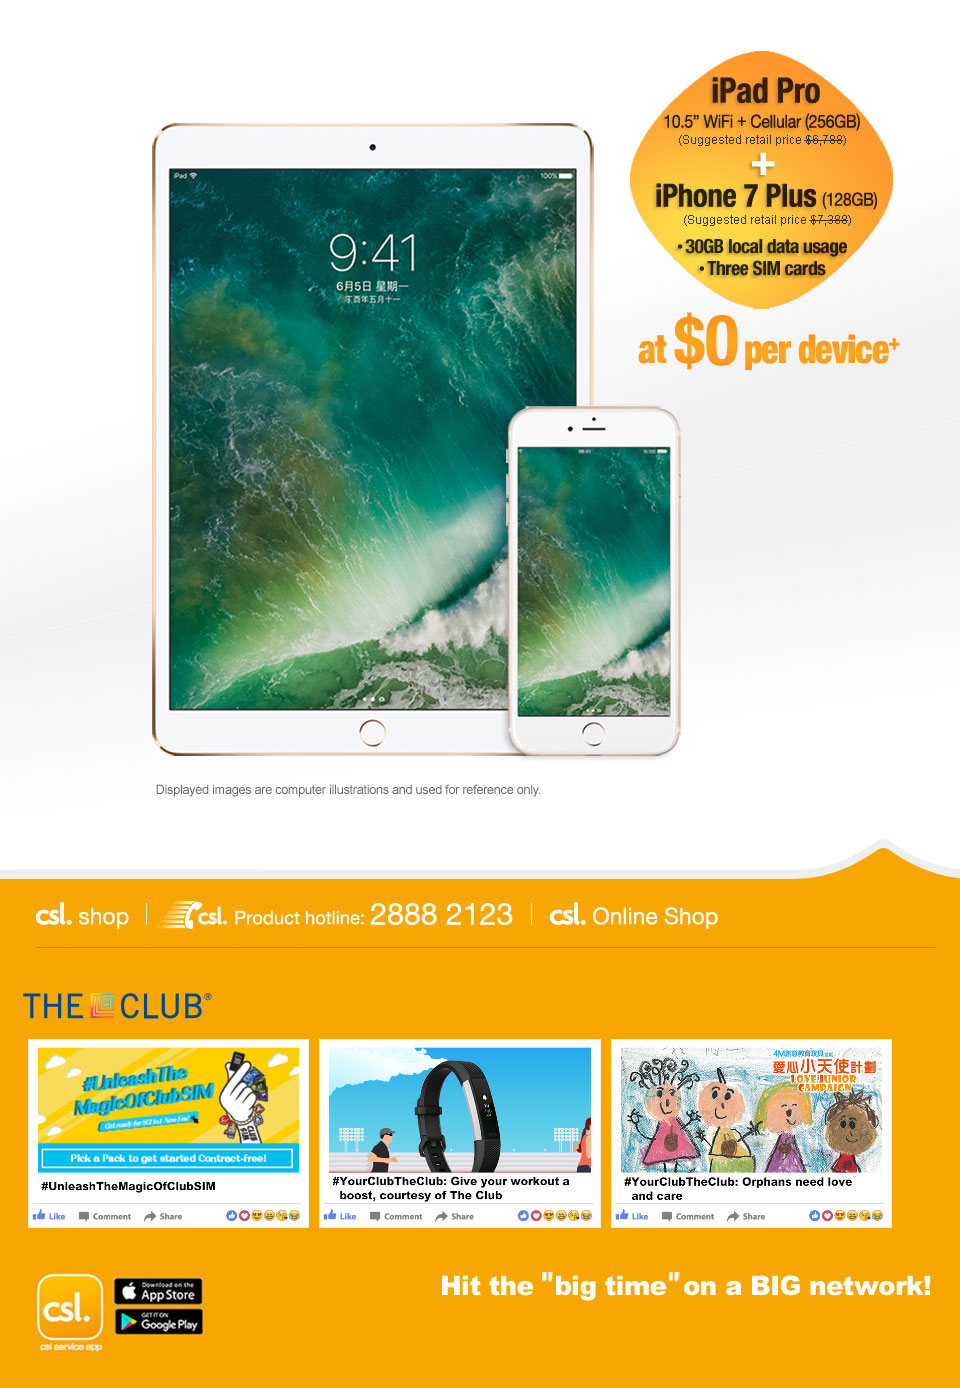 iPad Pro (10.5-Inch 256GB) + iPhone 7 Plus (128GB) twins offer